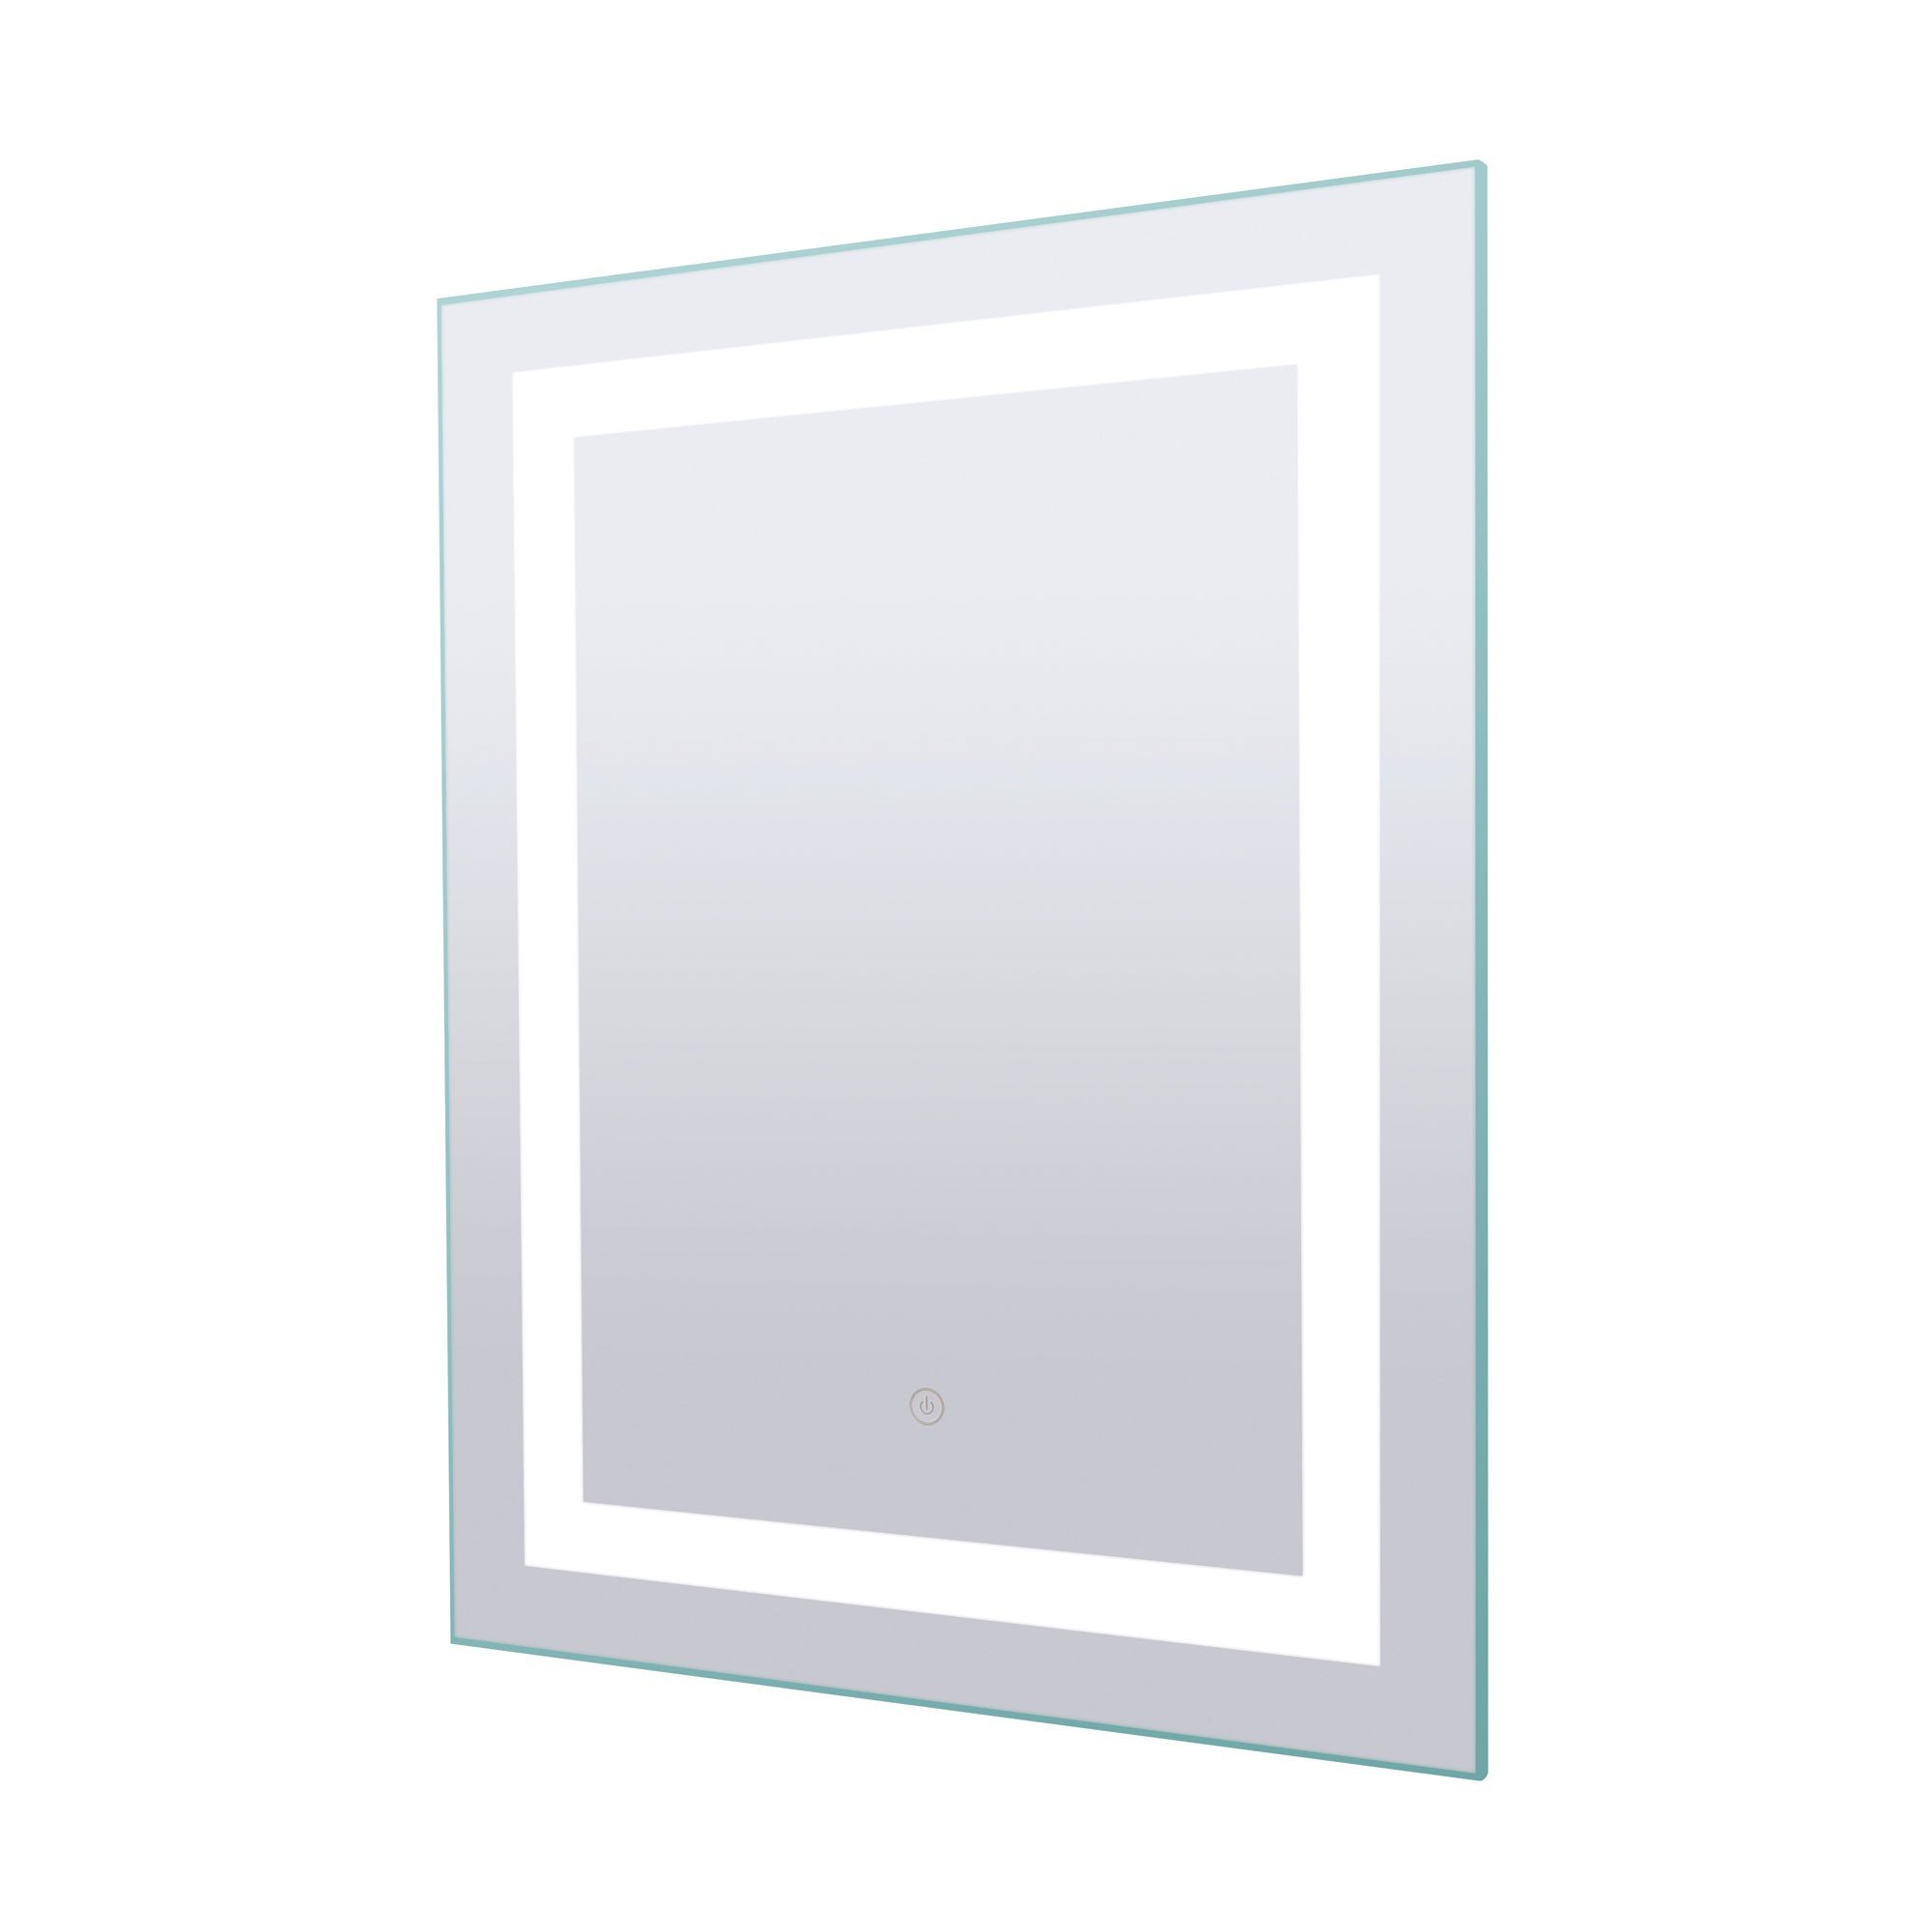 LED Square Mirror Mirrors 7th Sky Design 